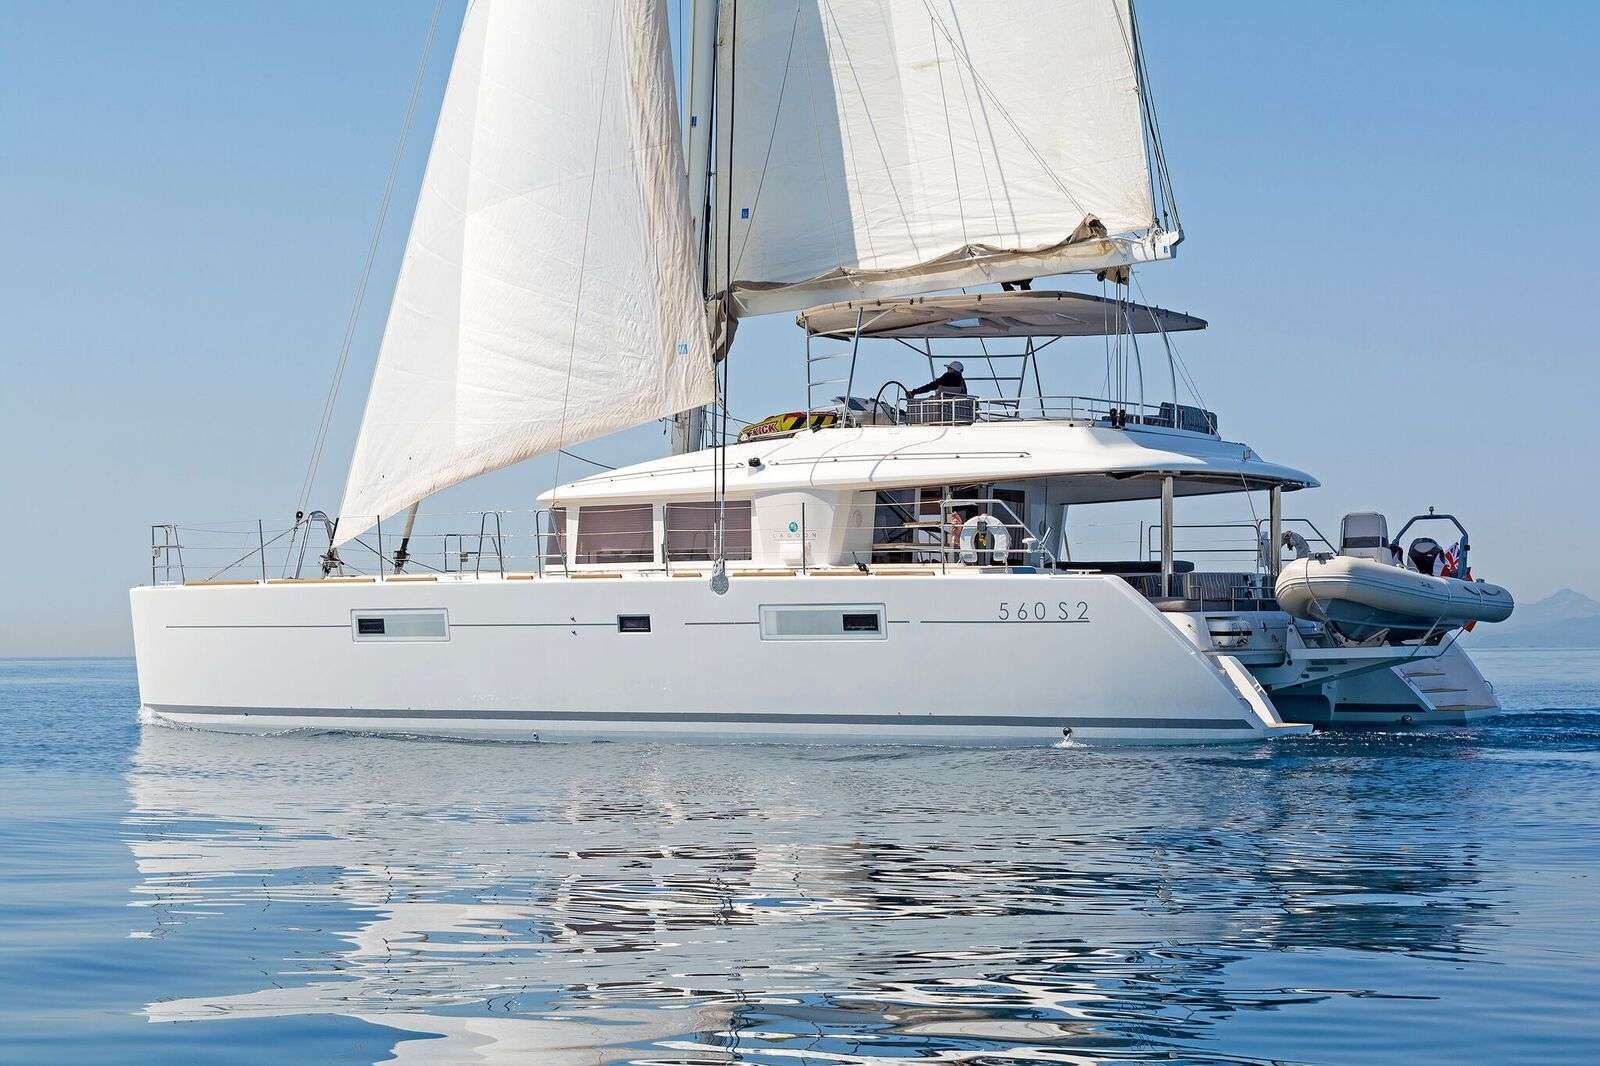 SEA BLISS Yacht Charter - Ritzy Charters